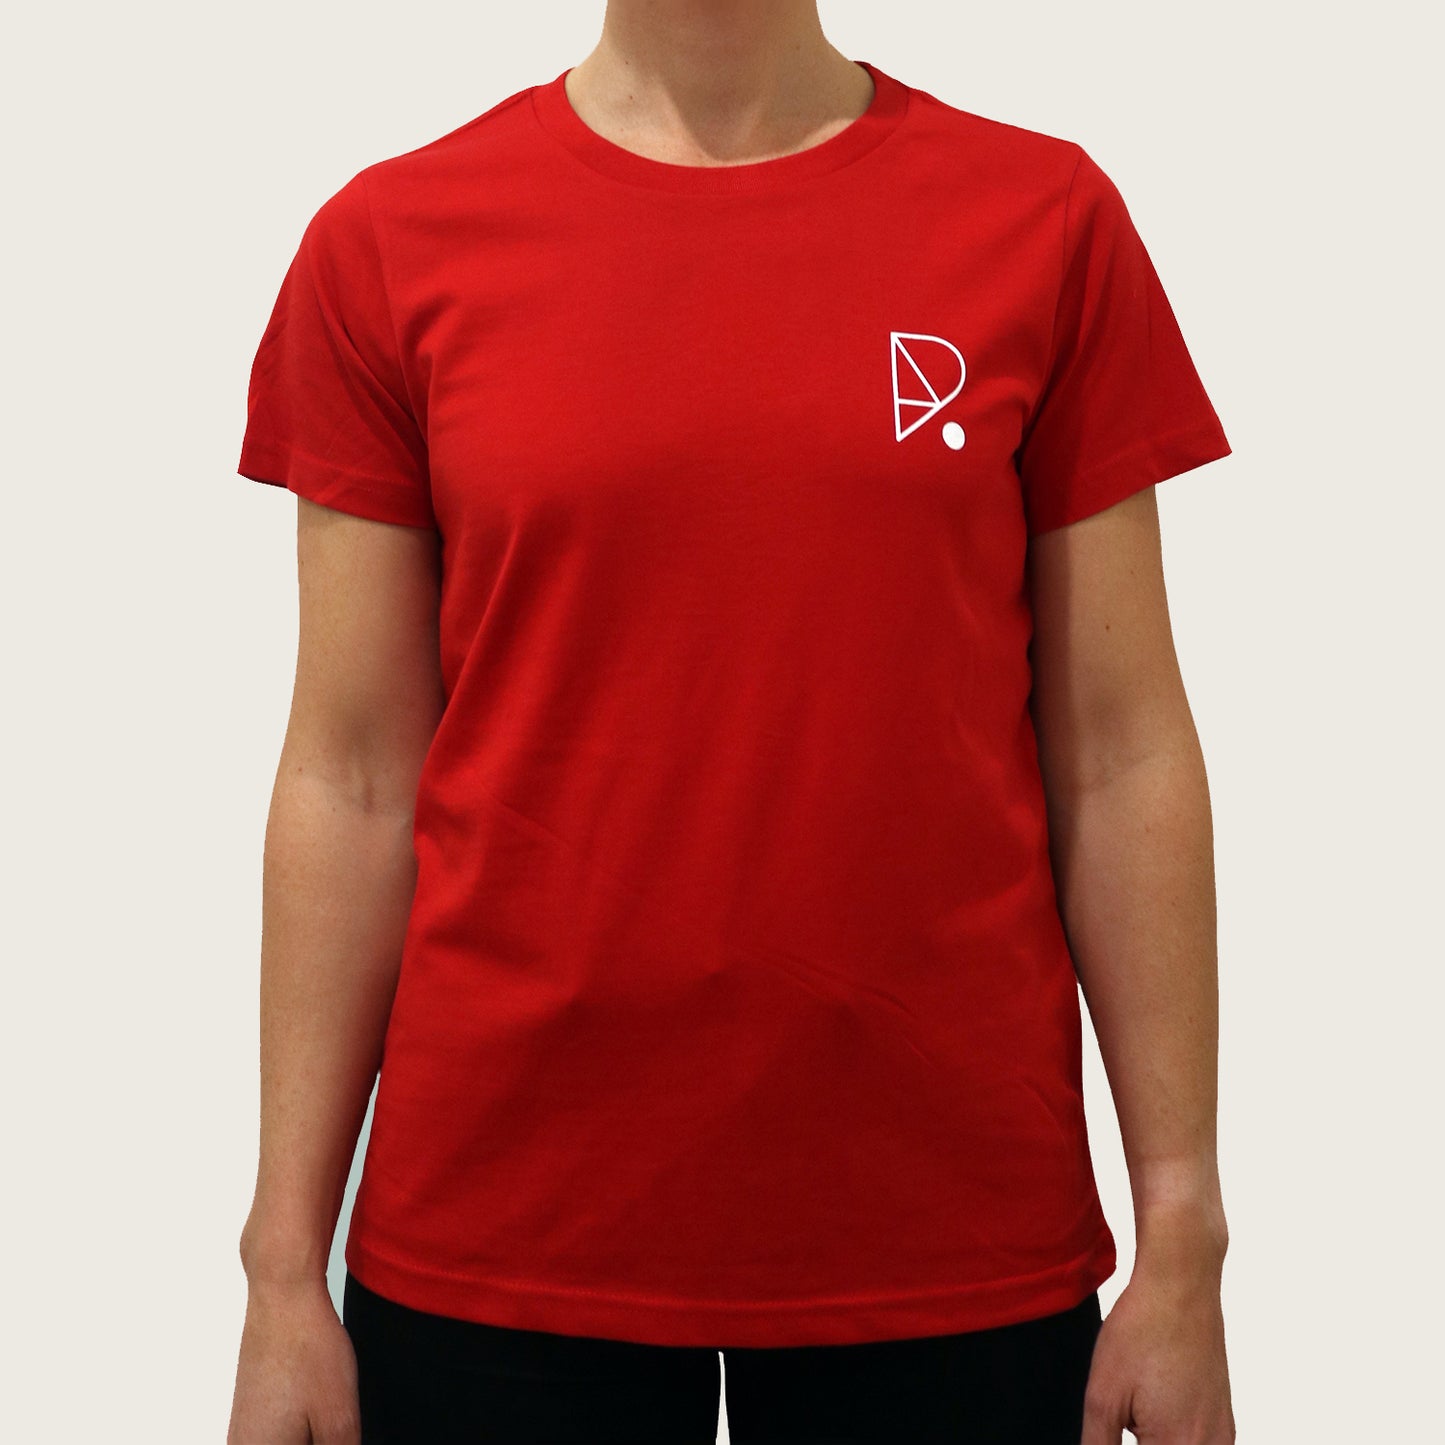 redpoint climbing teeshirt classic red women contoured cut front